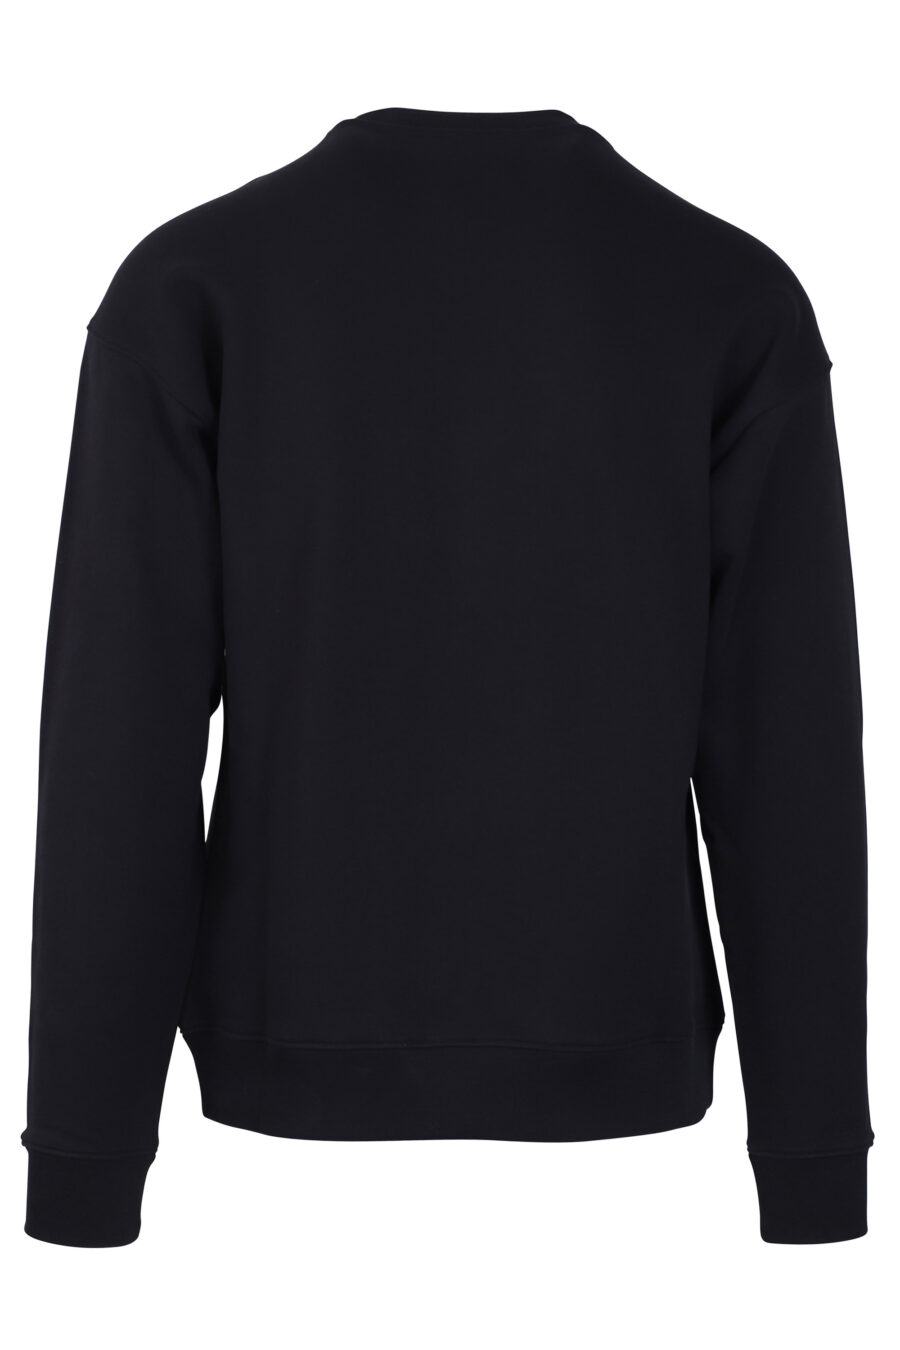 Black sweatshirt with white stripe logo - IMG 0762